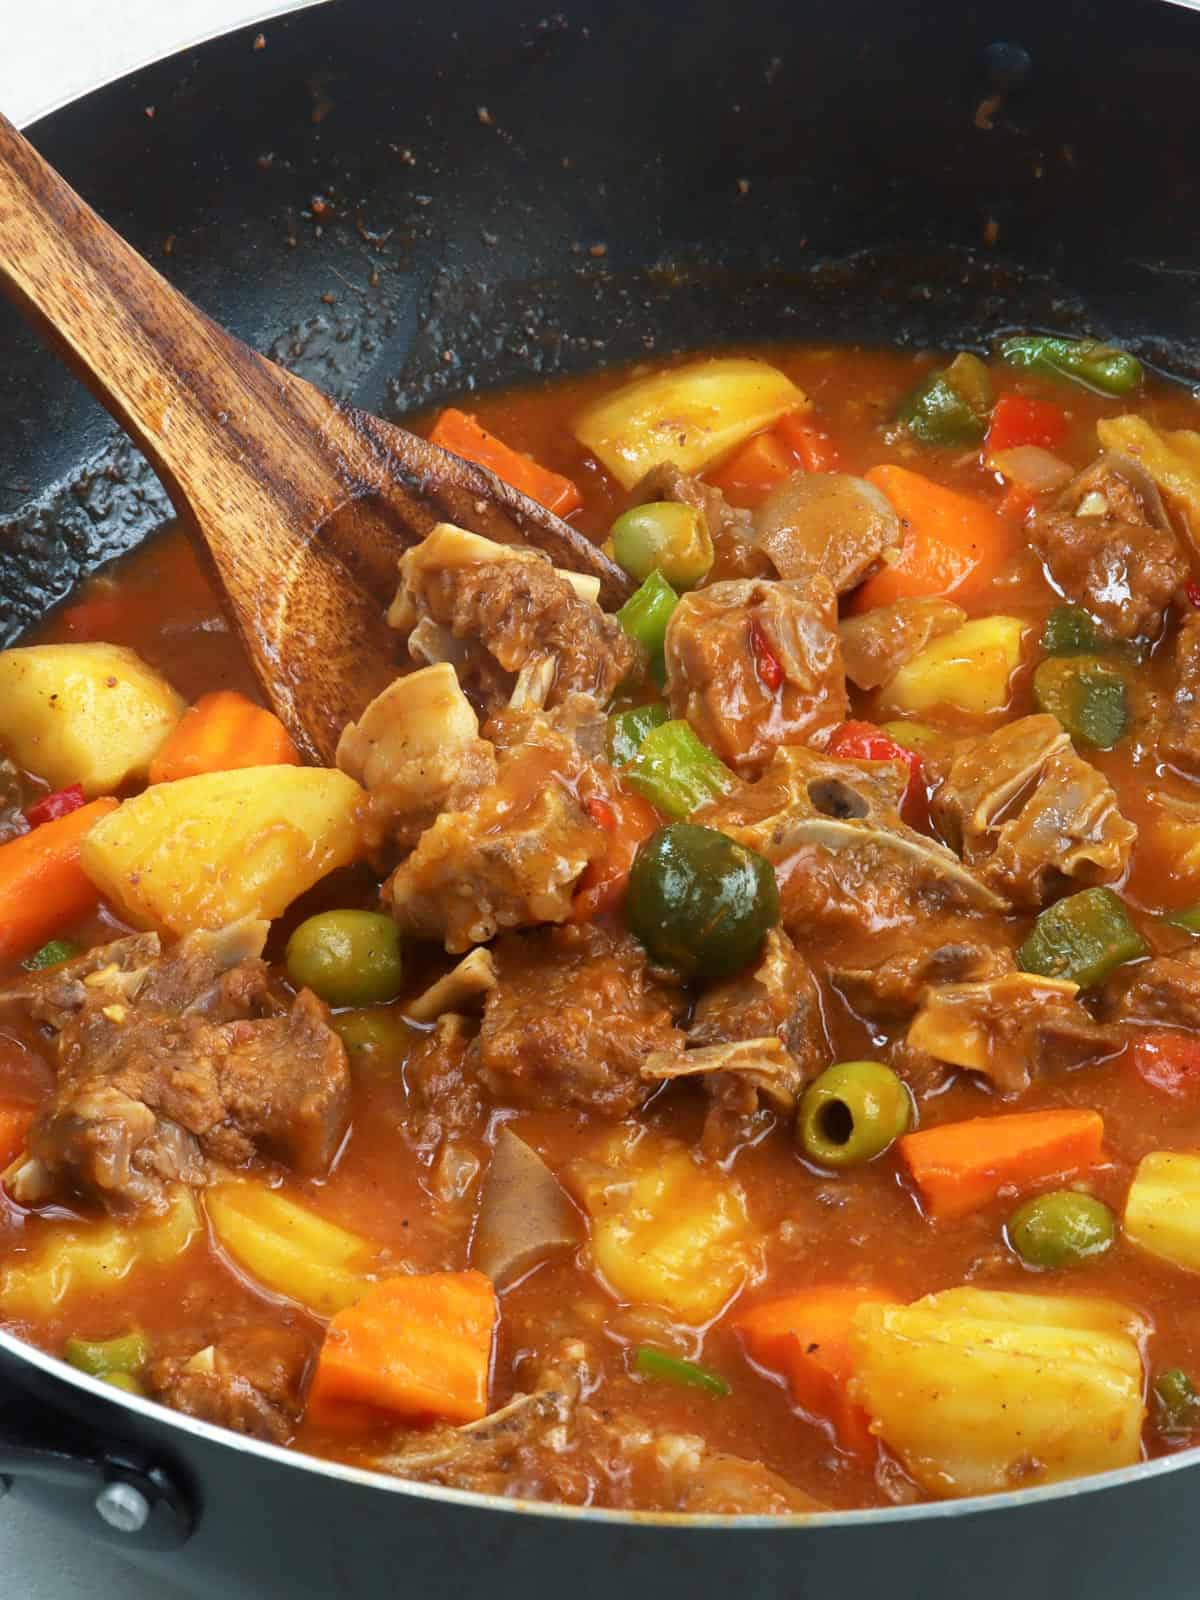 goat caldereta cooked in a pan